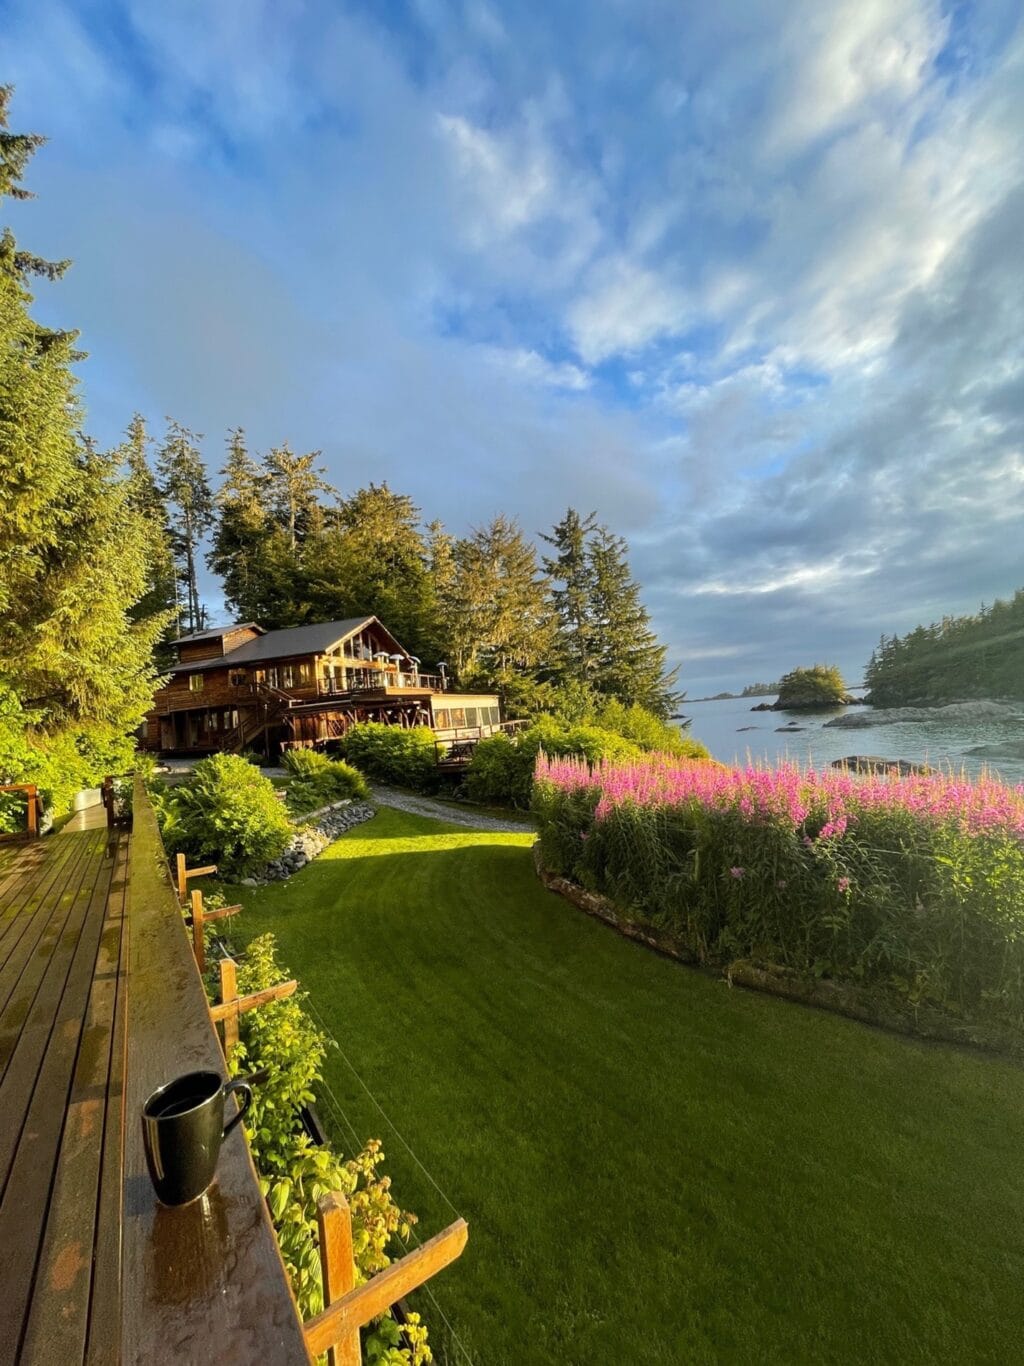 scenic view of Talon Lodge in Sitka, Alaska with beautiful blue sky